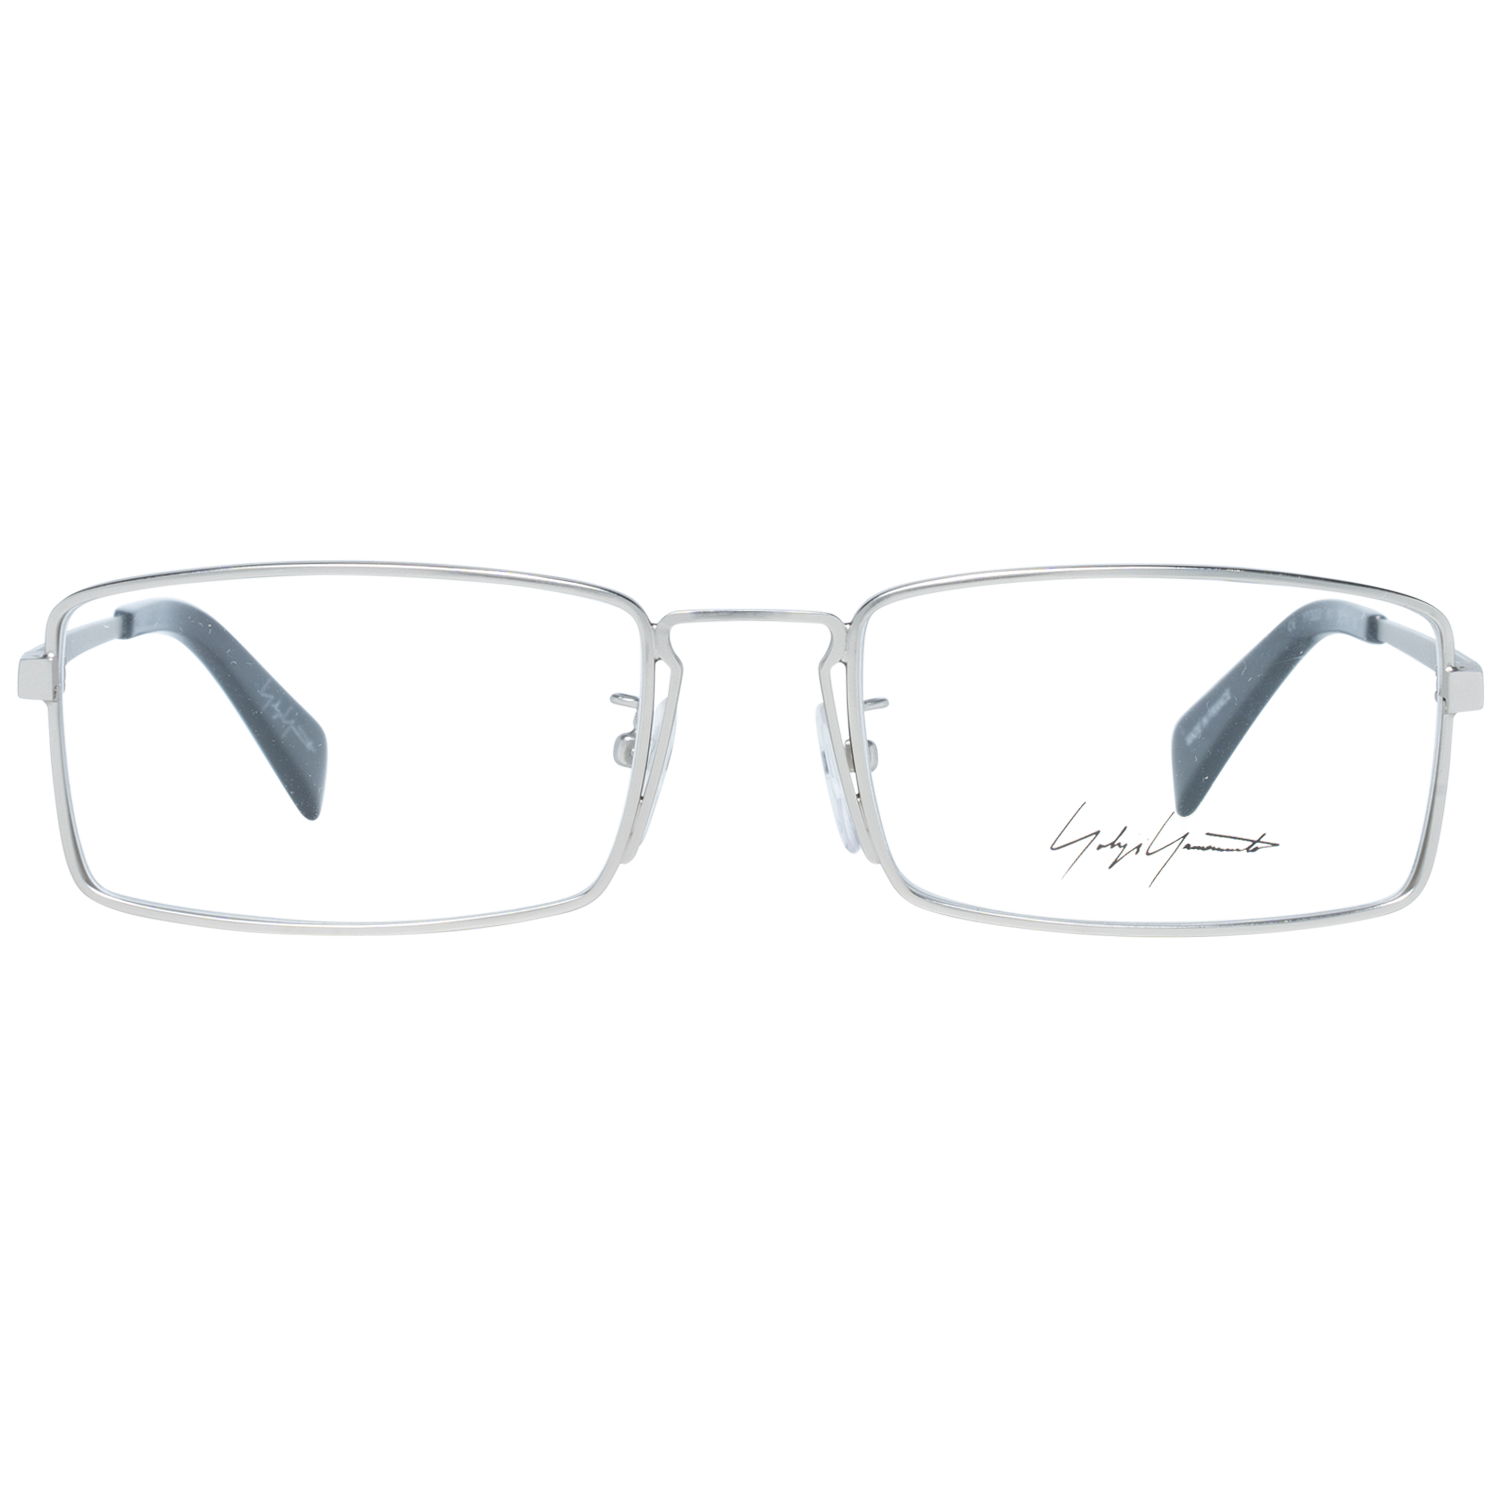 Yohji Yamamoto Frames Yohji Yamamoto Optical Frame YY3003 811 56 Eyeglasses Eyewear UK USA Australia 